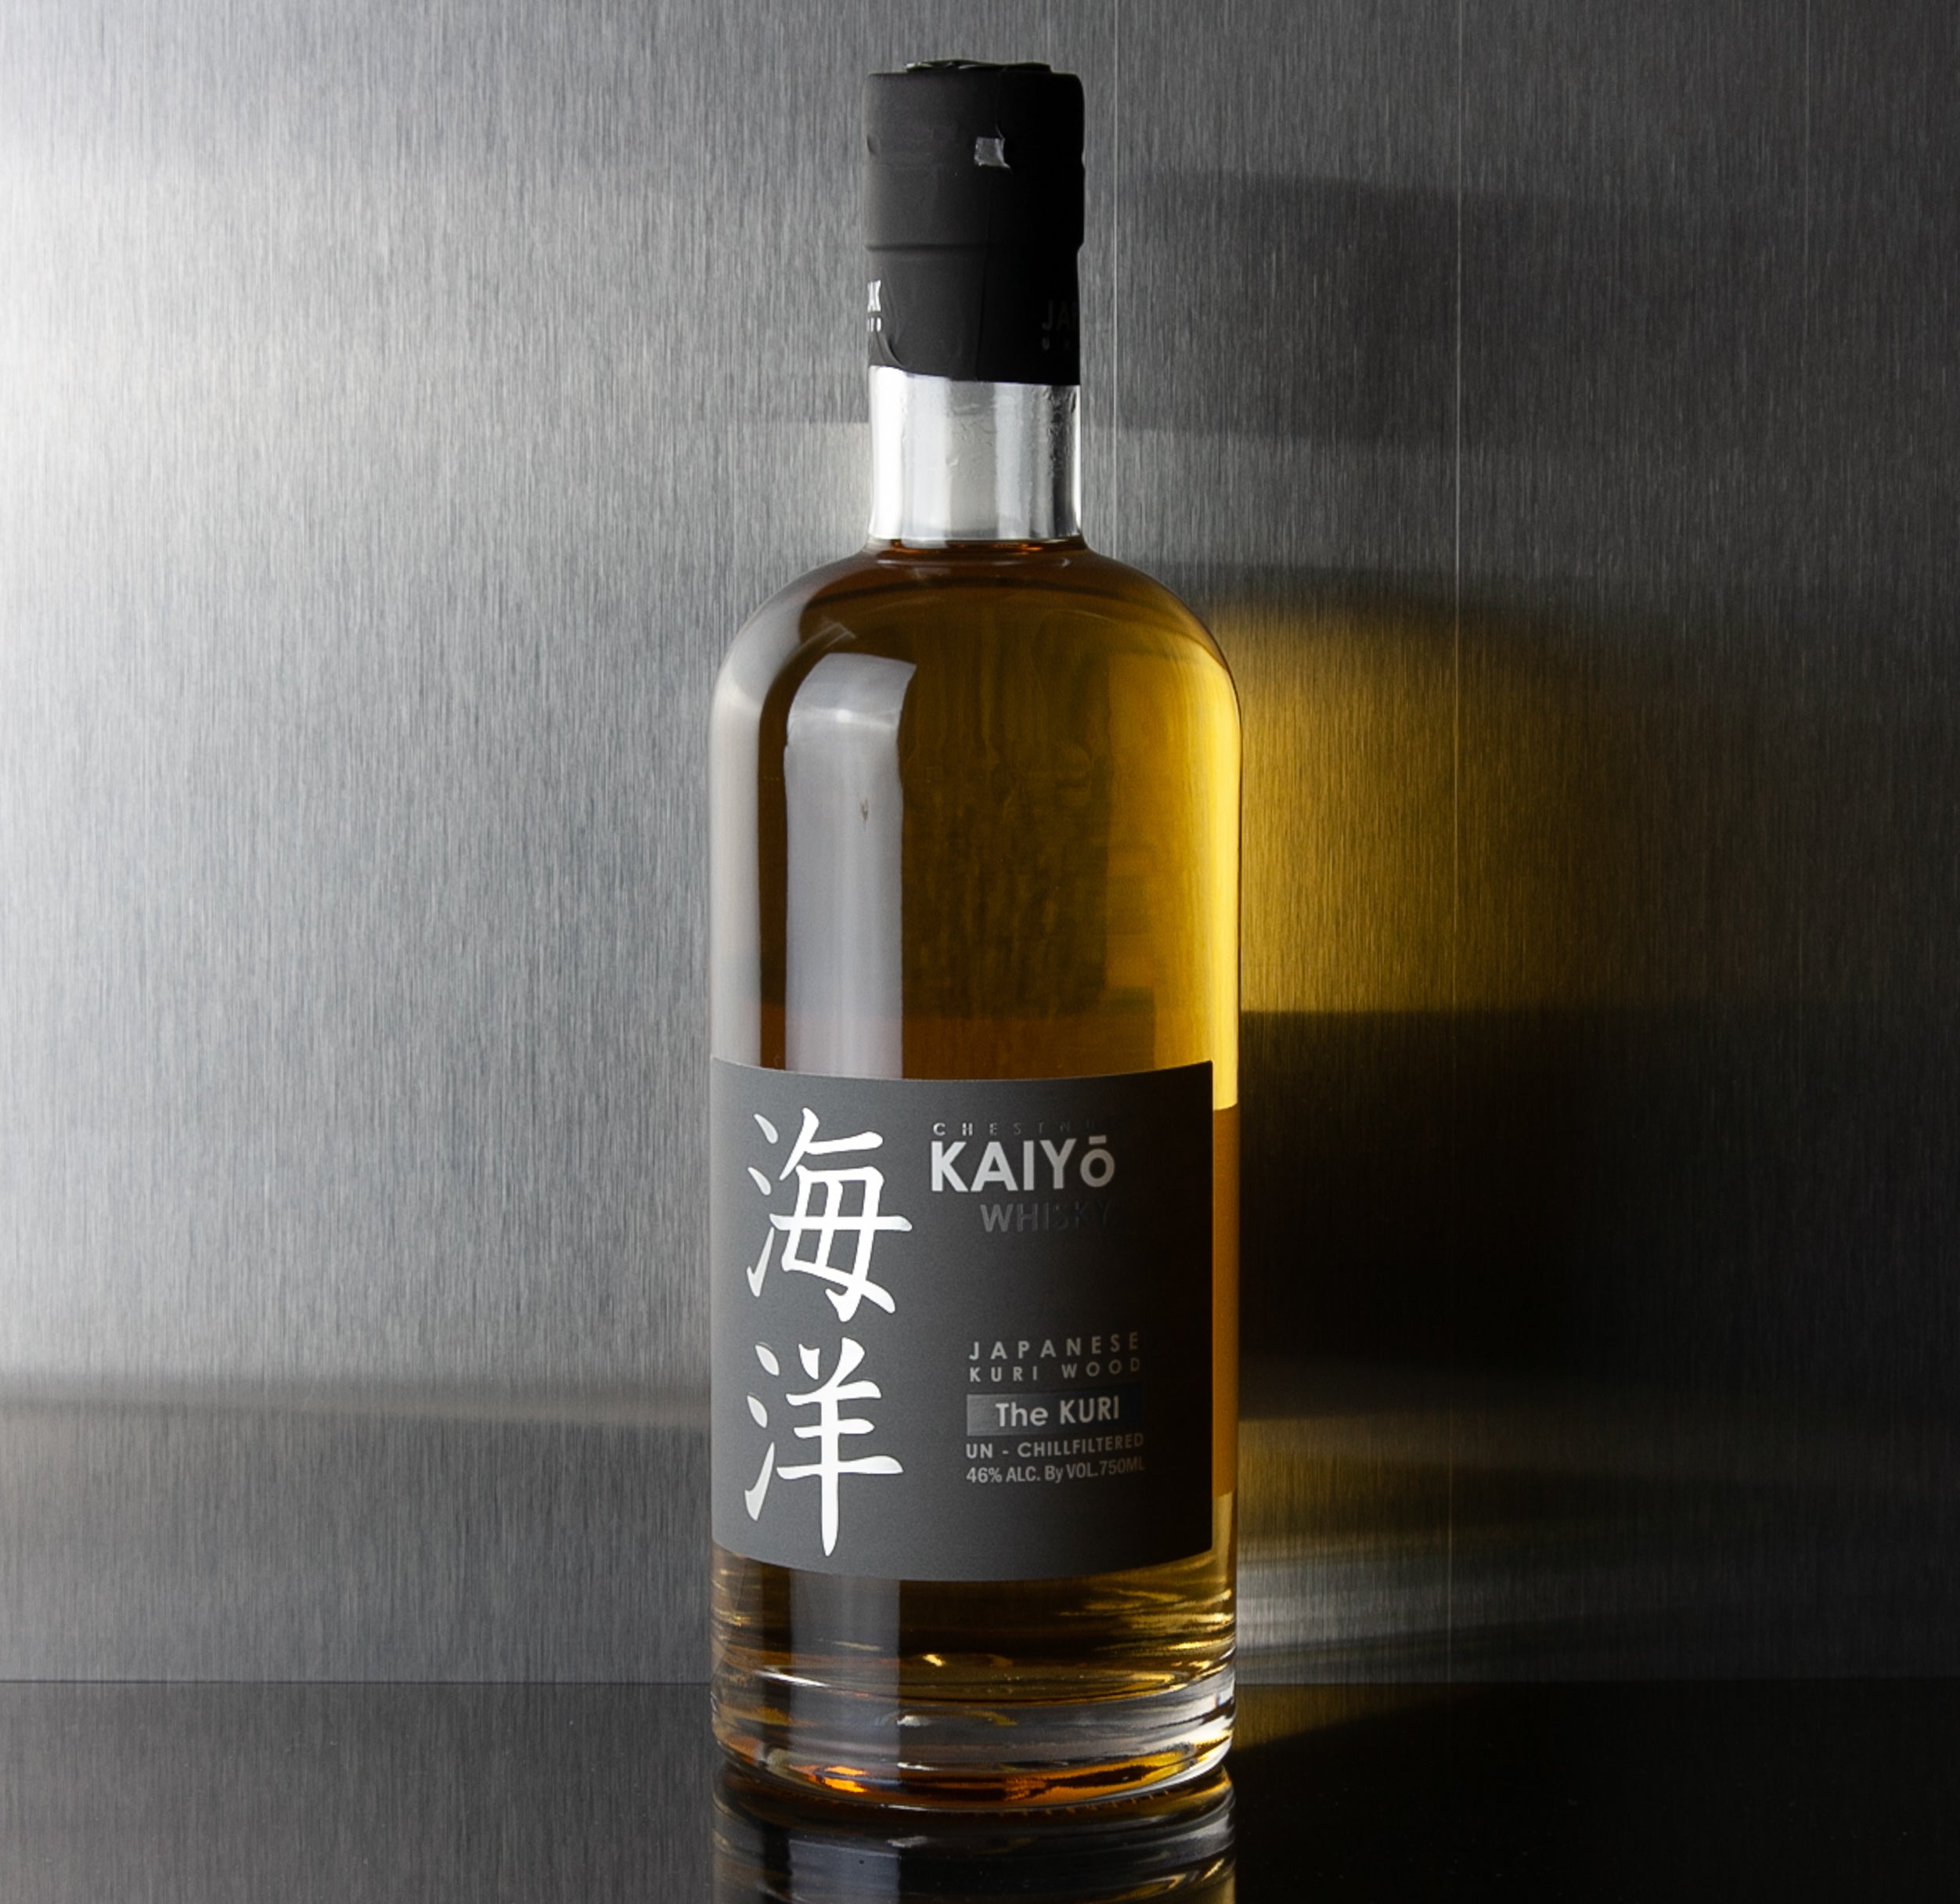 Kaiyo The Kuri Whisky